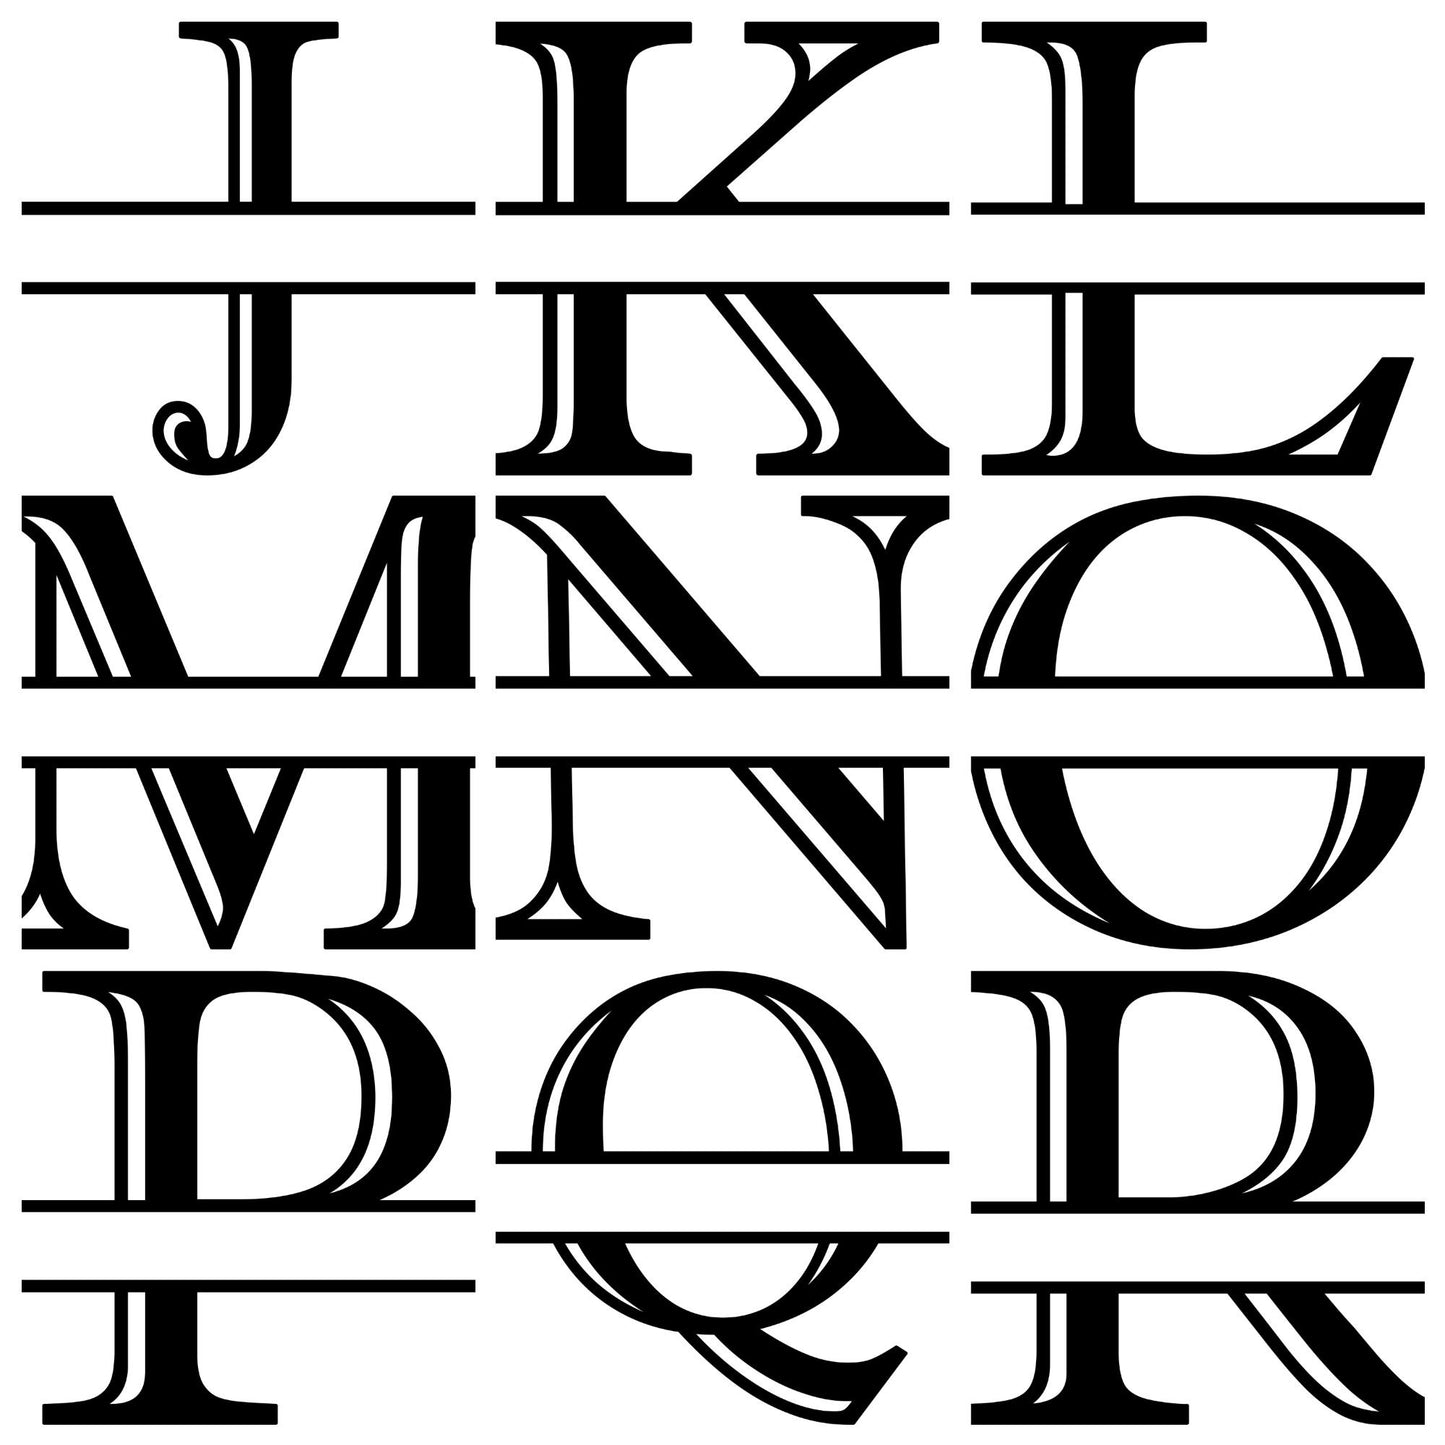 Full Alphabet Letter Split Monograms - Digital file with SVG and PNG file